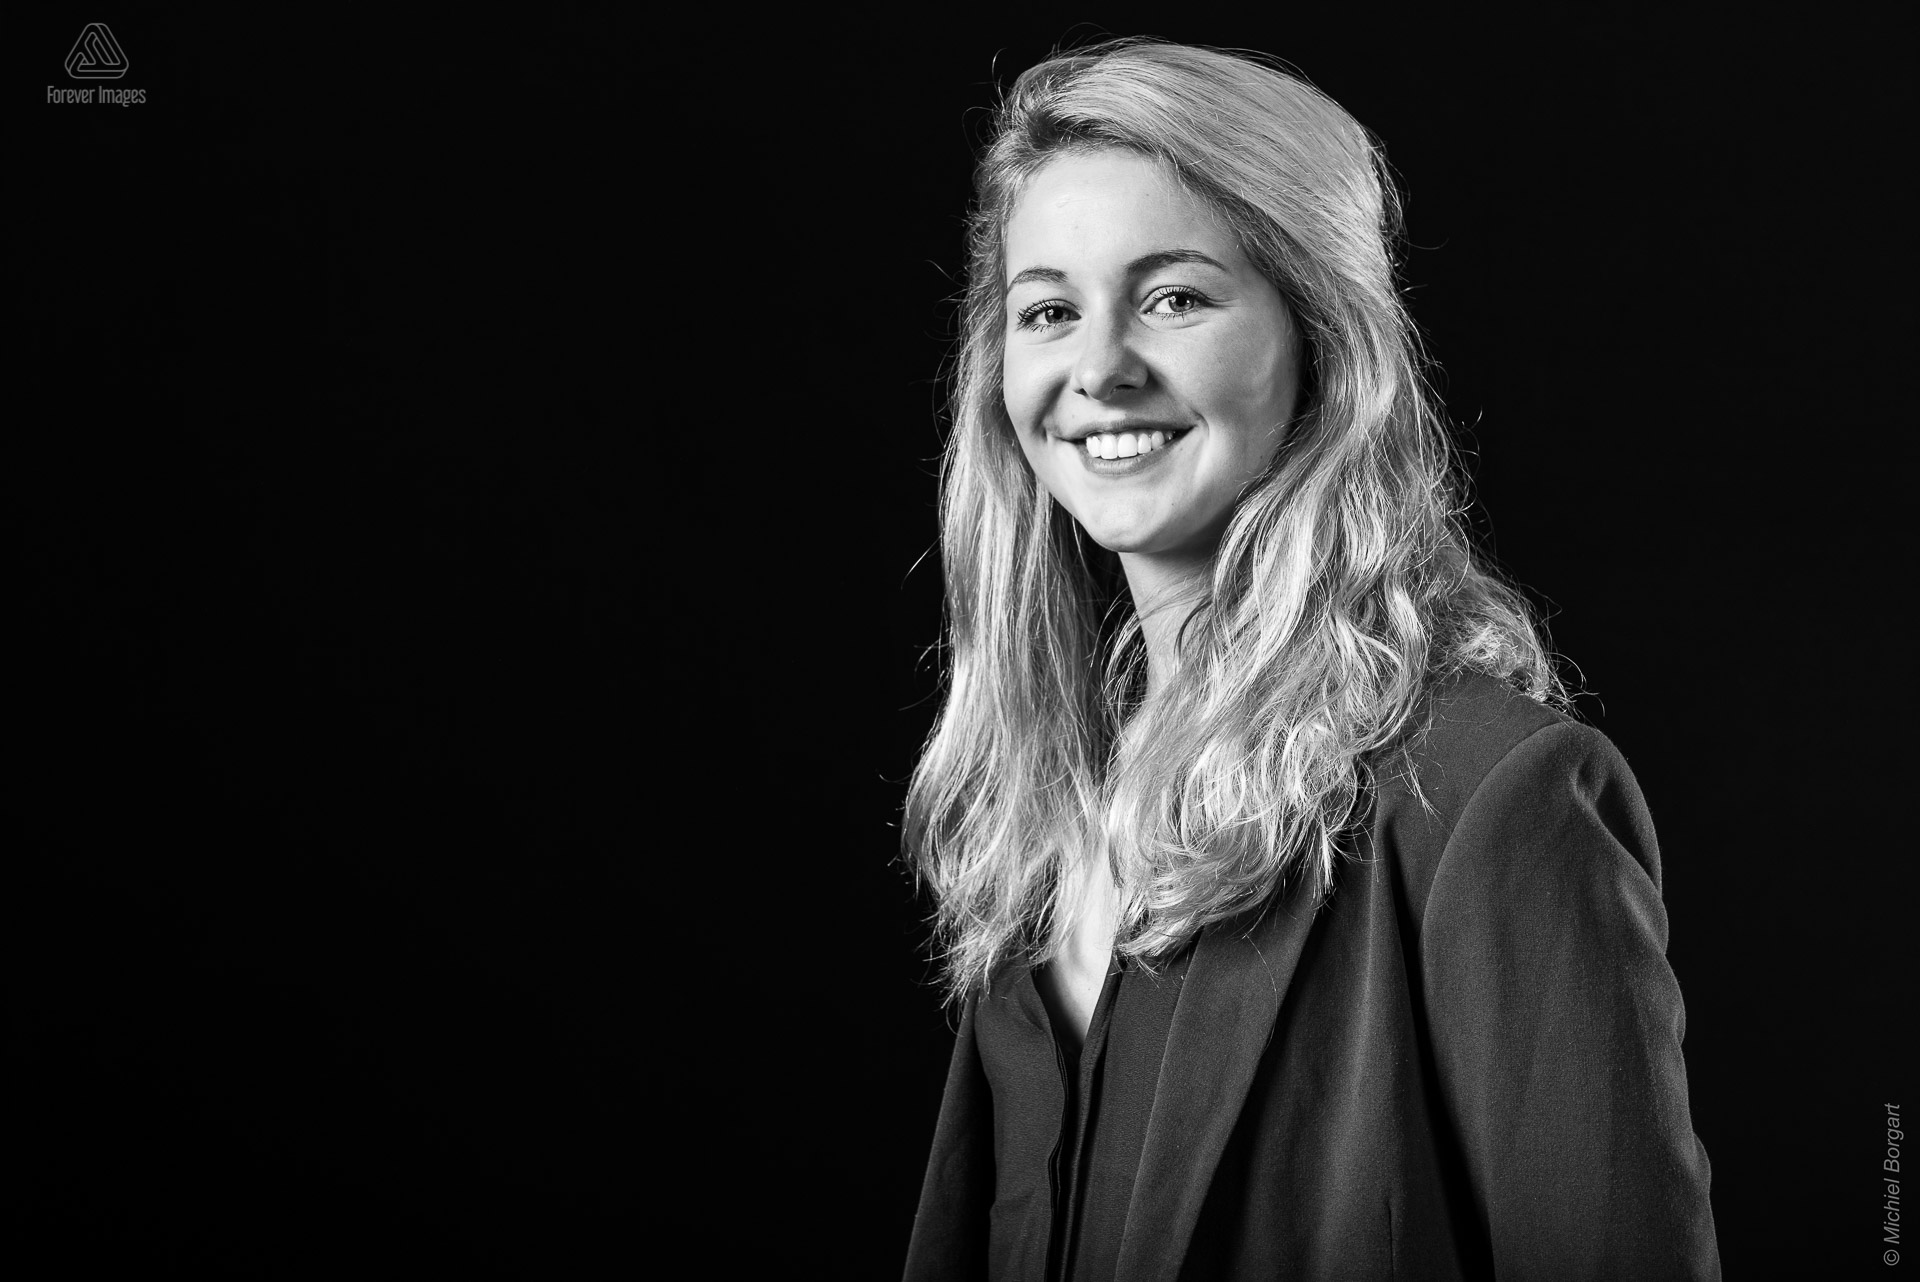 Portretfoto in zwart-wit mooie jonge blonde dame met jasje aan | Nicolette Nijhuis | Portretfotograaf Michiel Borgart - Forever Images.